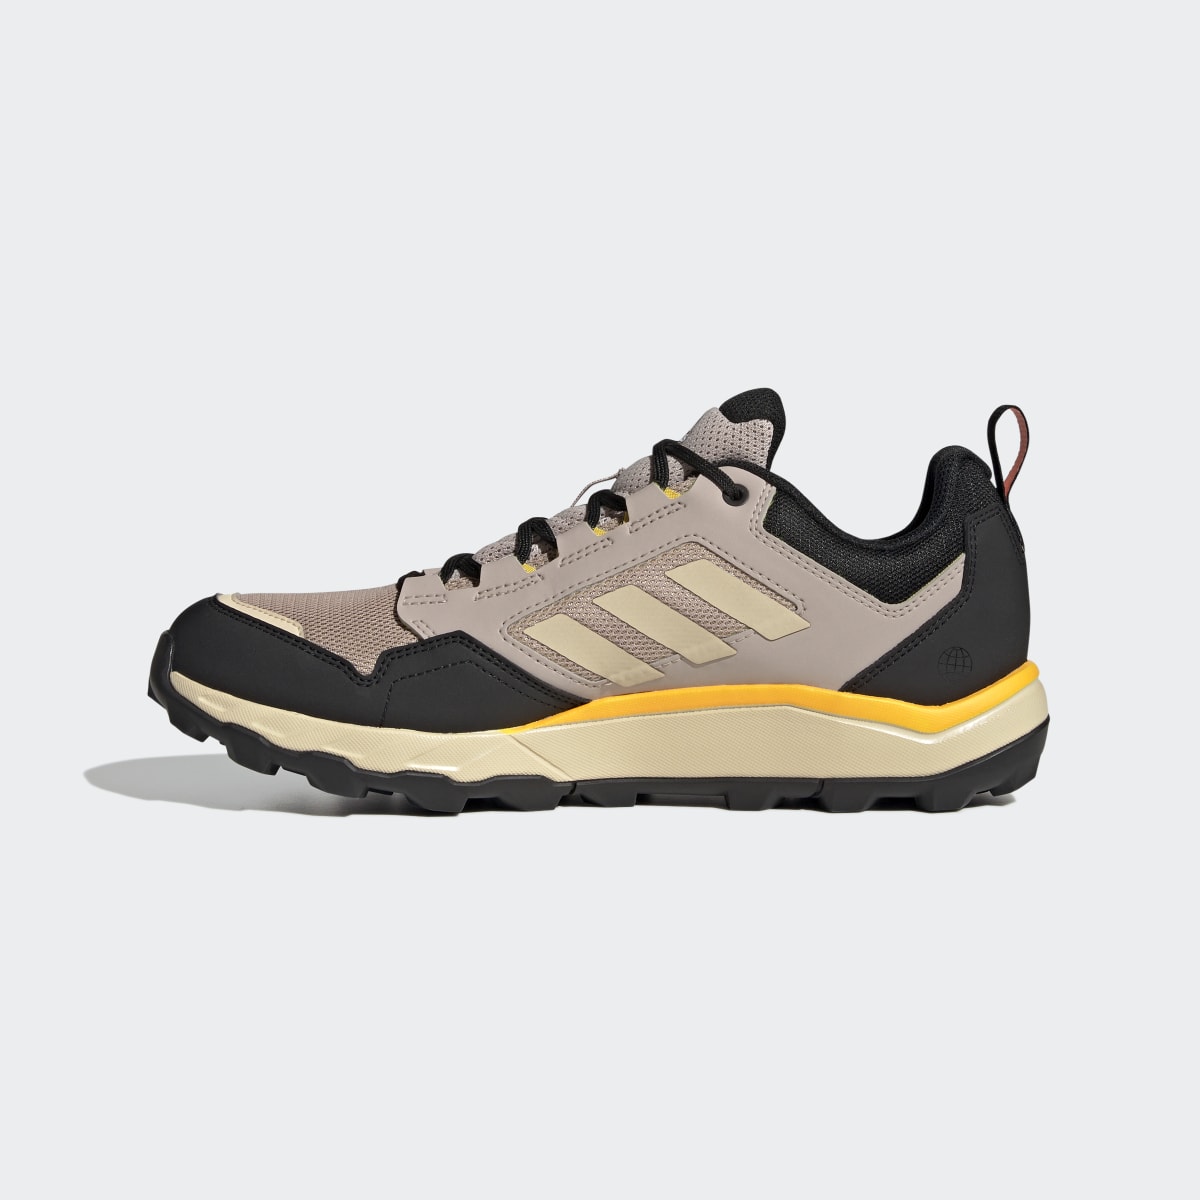 Adidas Tracerocker 2.0 GORE-TEX Trail Running Shoes. 7